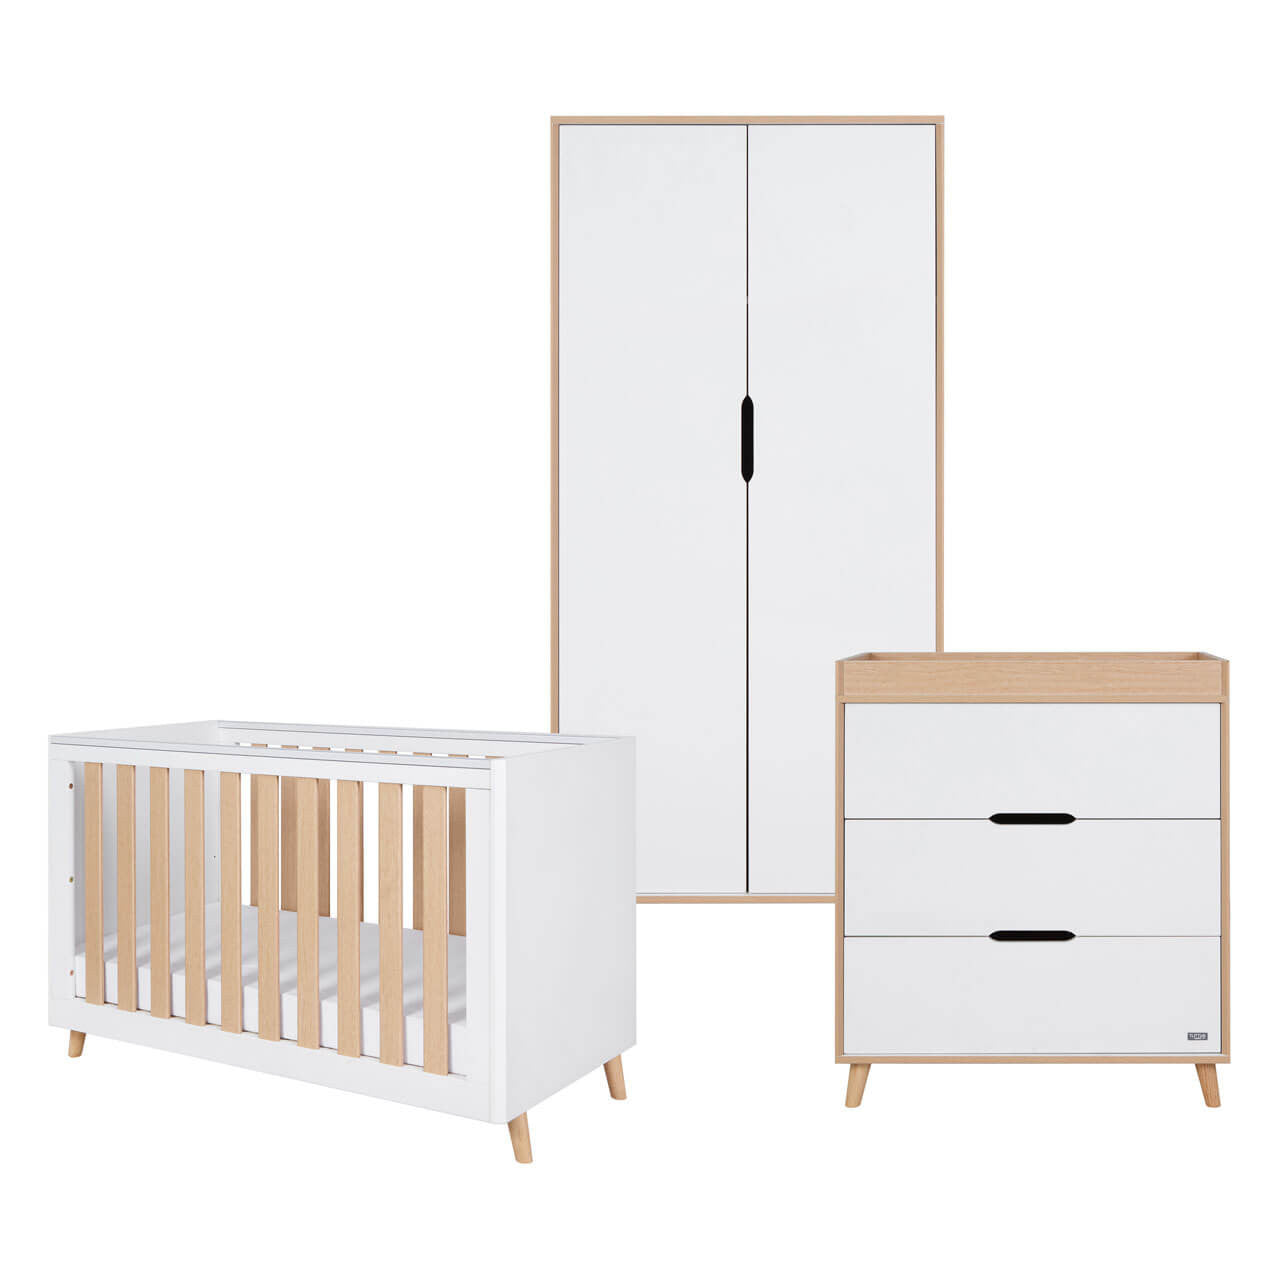 Tutti Bambini Fika Mini 3 Piece Room Set - White/Light Oak - For Your Little One